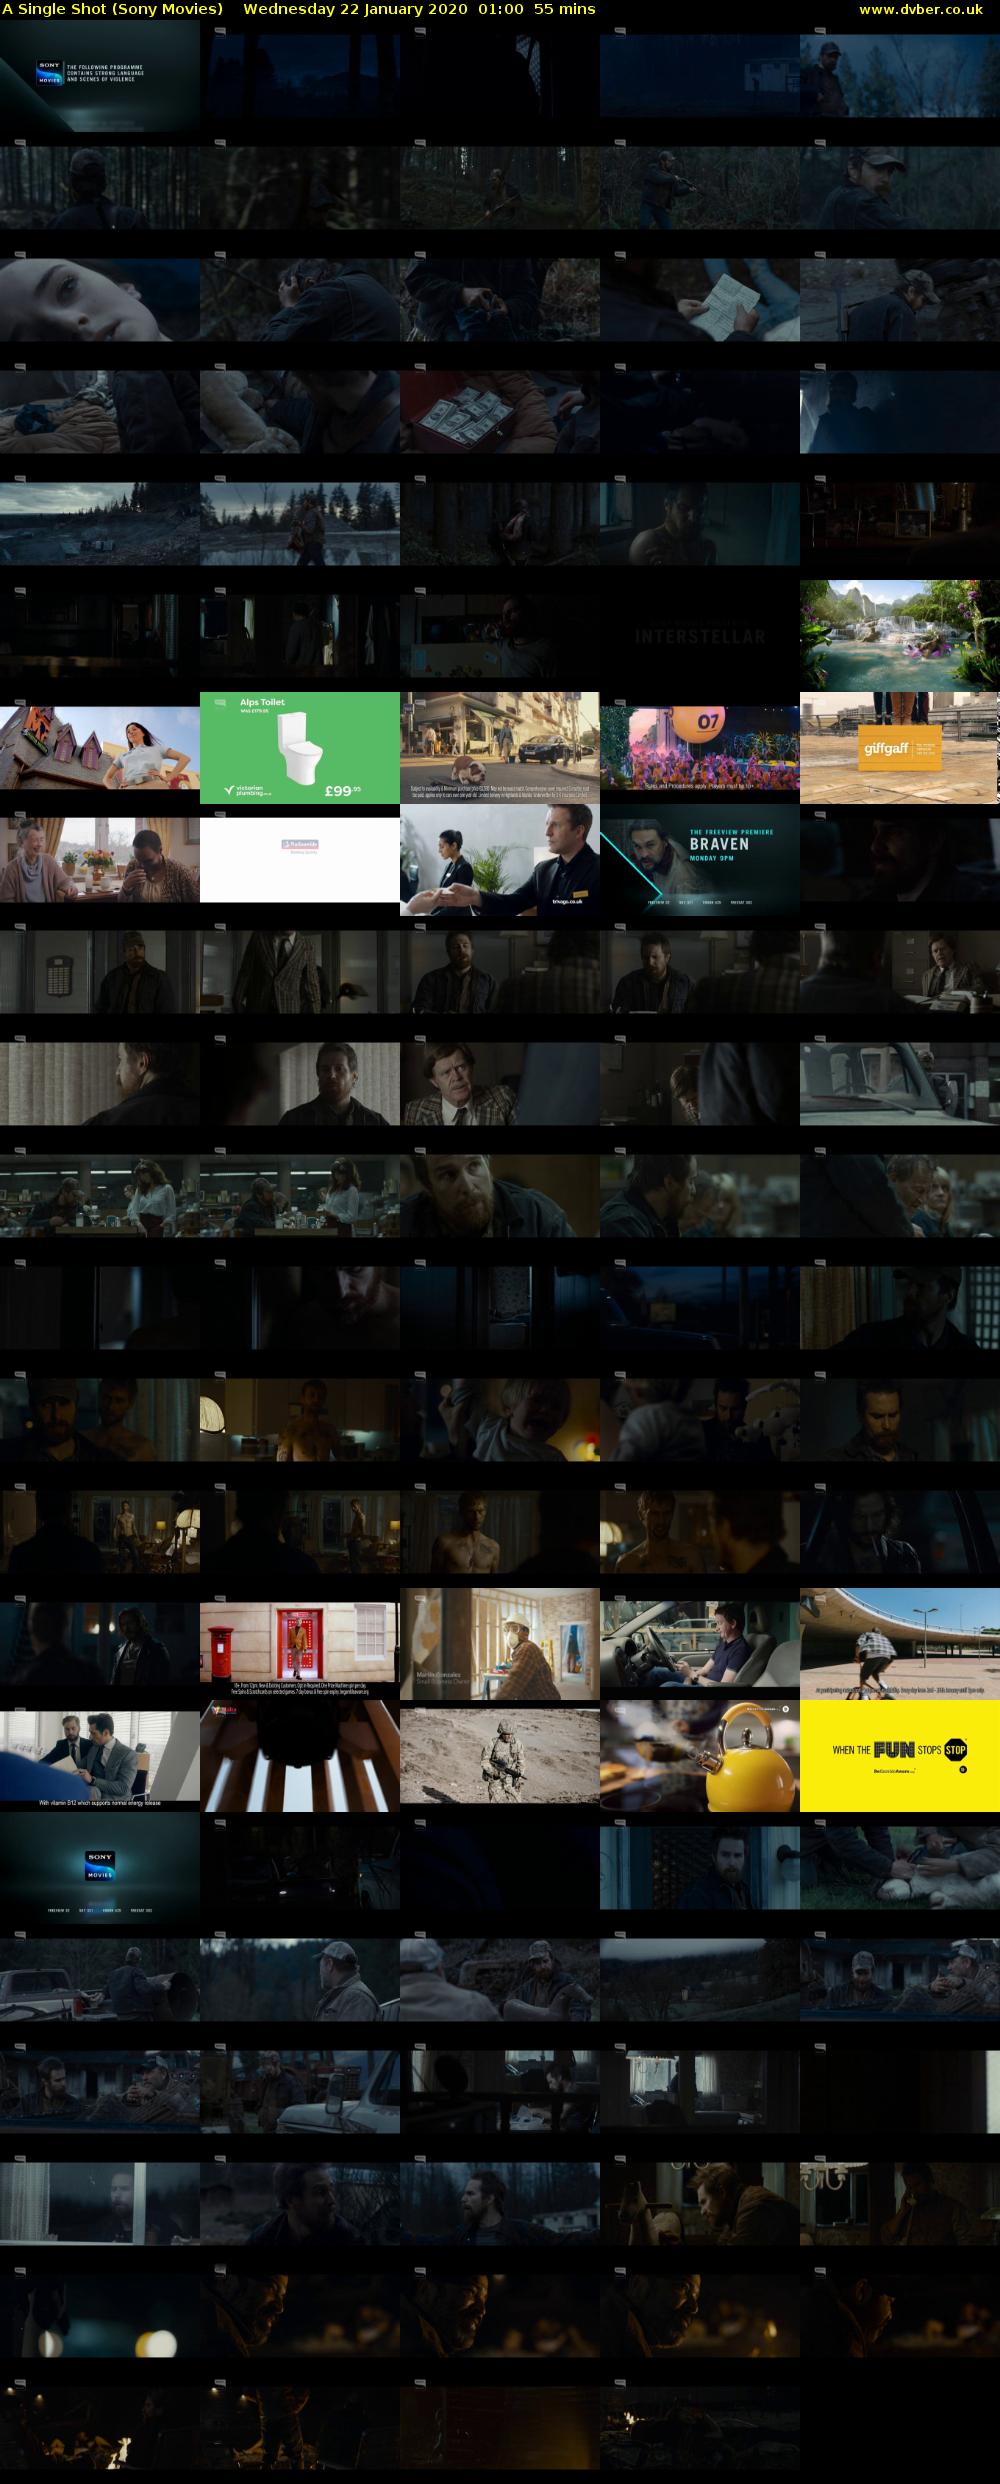 A Single Shot (Sony Movies) Wednesday 22 January 2020 01:00 - 01:55